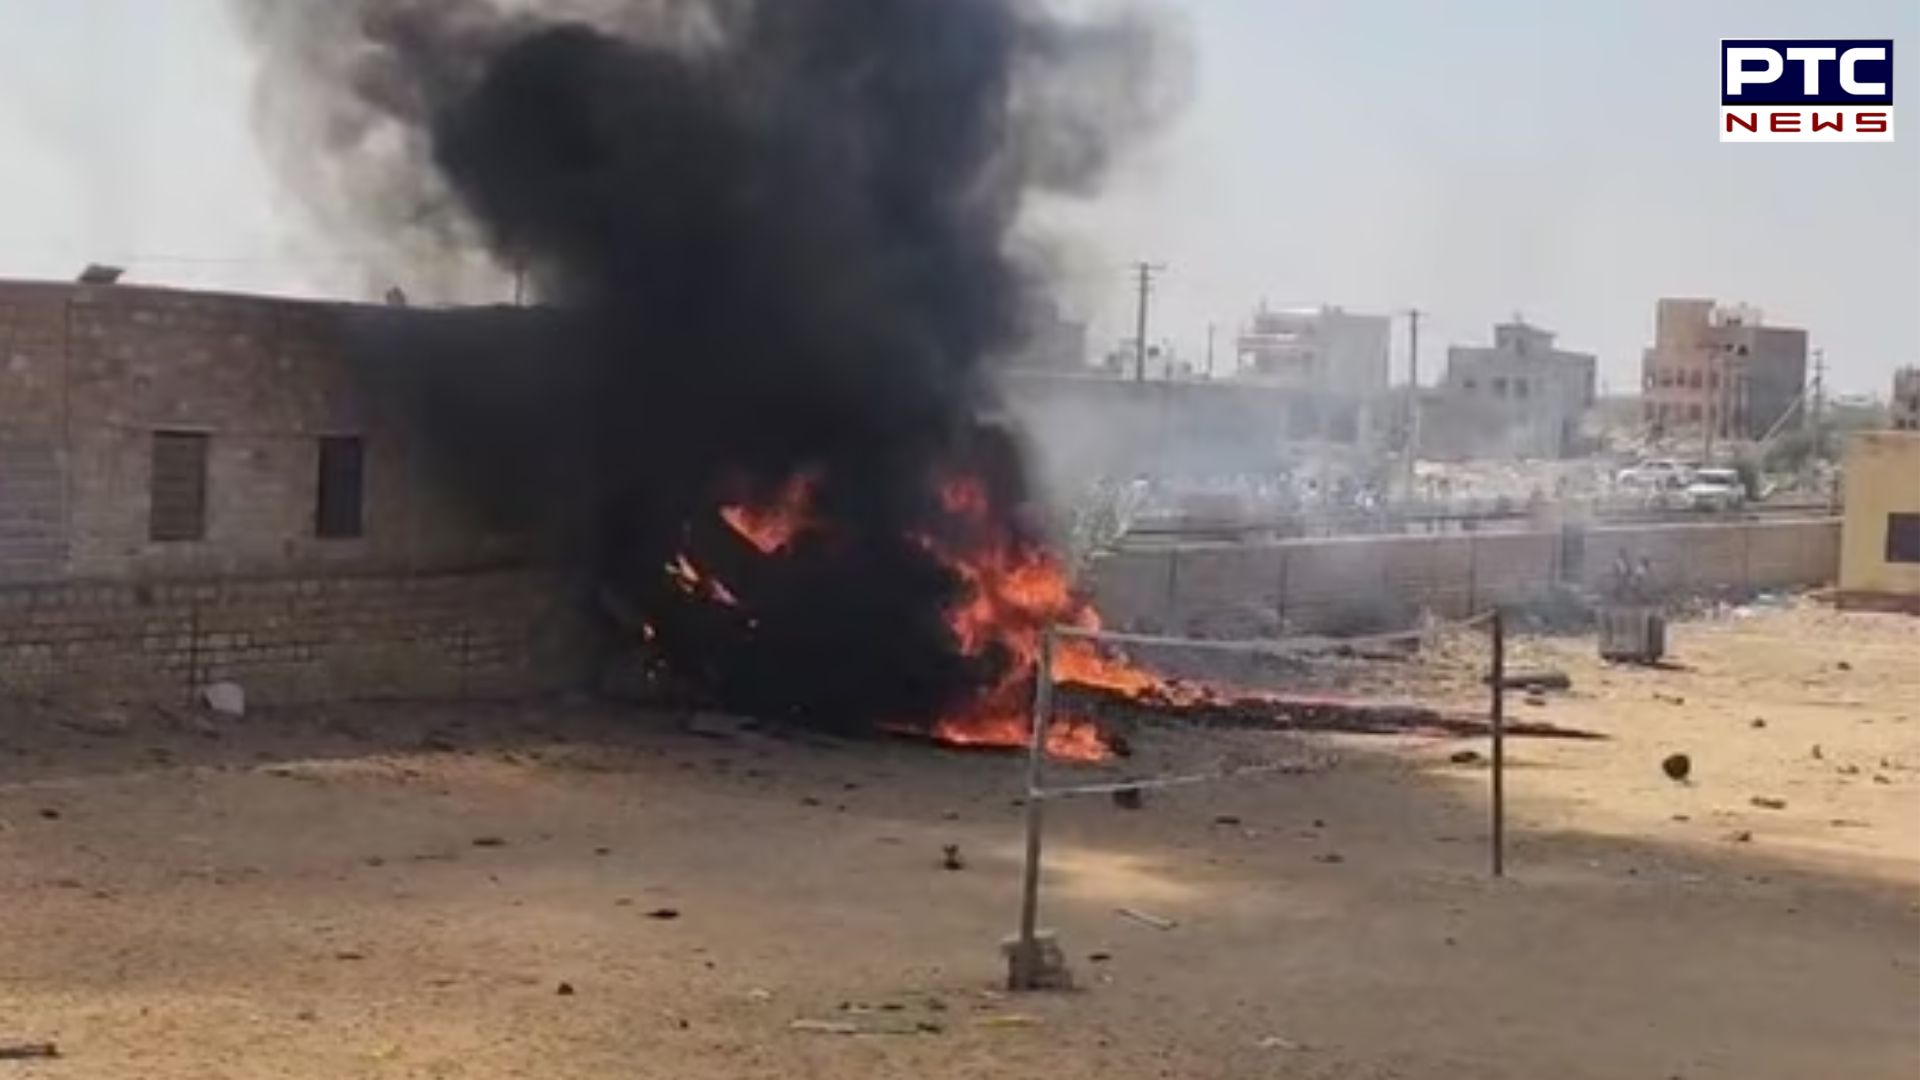 Rajasthan: IAF's Tejas aircraft crashes near students' hostel in Jaisalmer